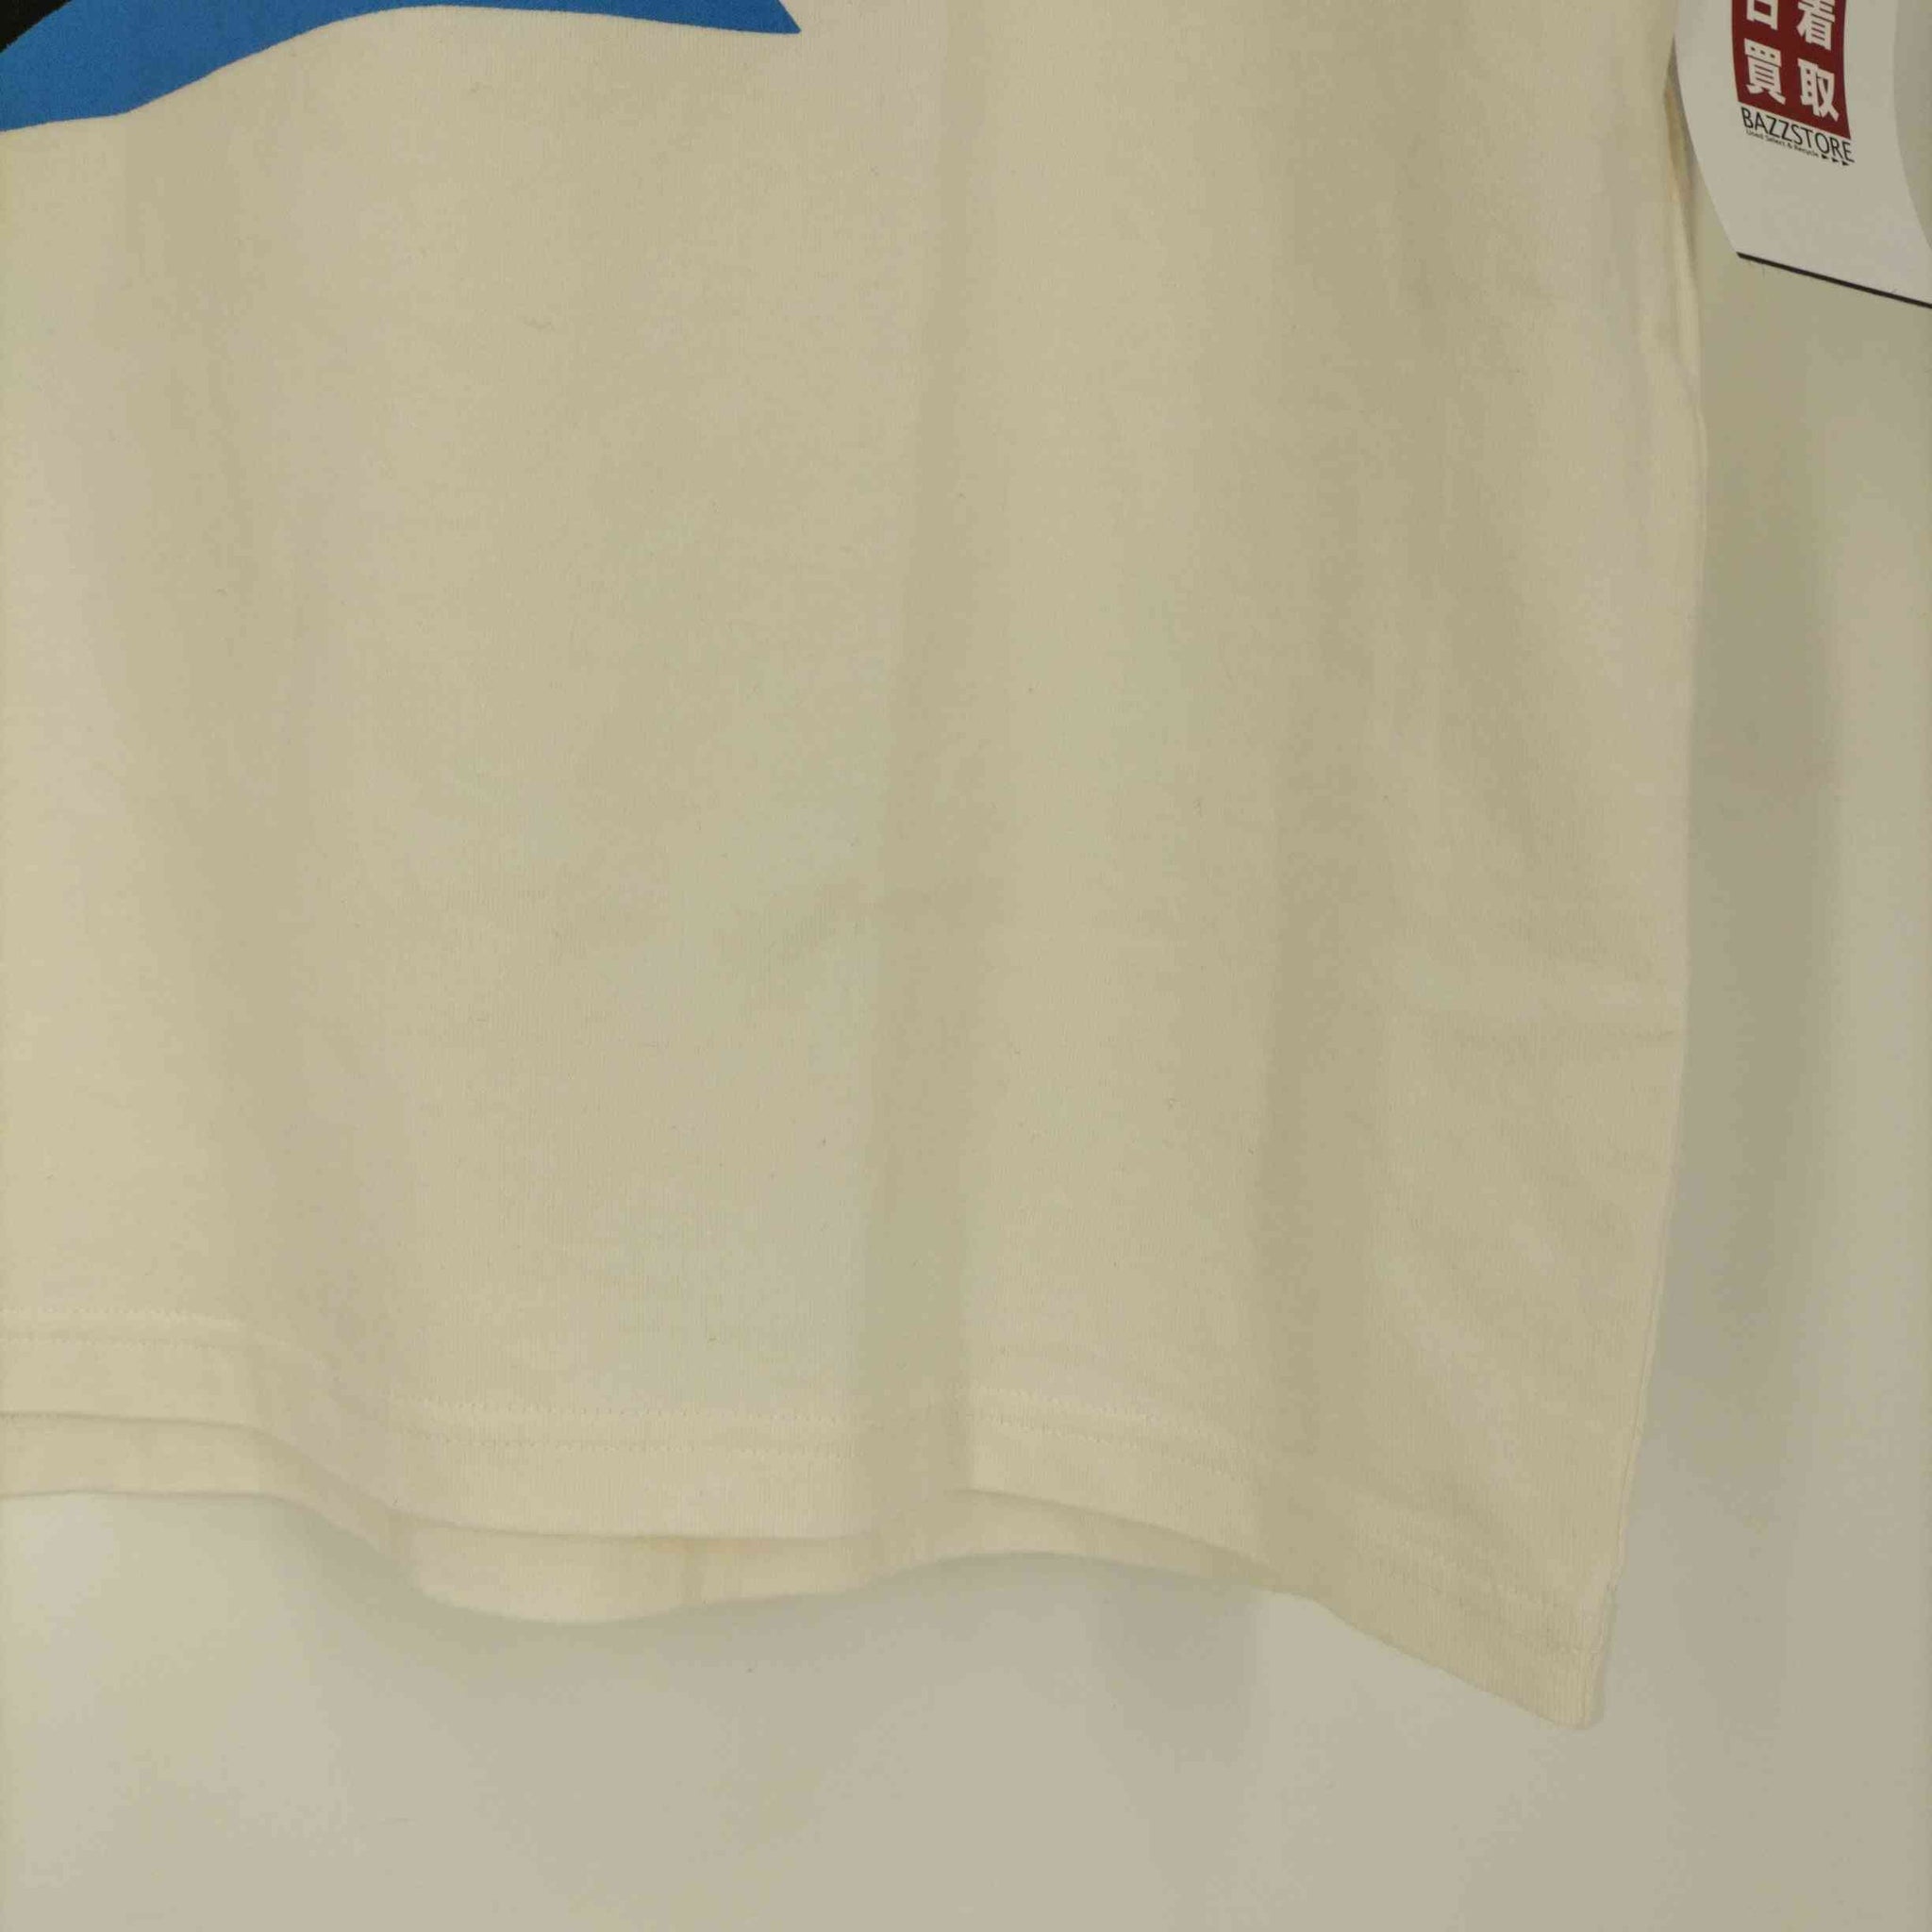 UNDERCOVER(アンダーカバー)ZIP TEE ROSE COLLAGE サイドジップ グラフィックプリントTシャツ